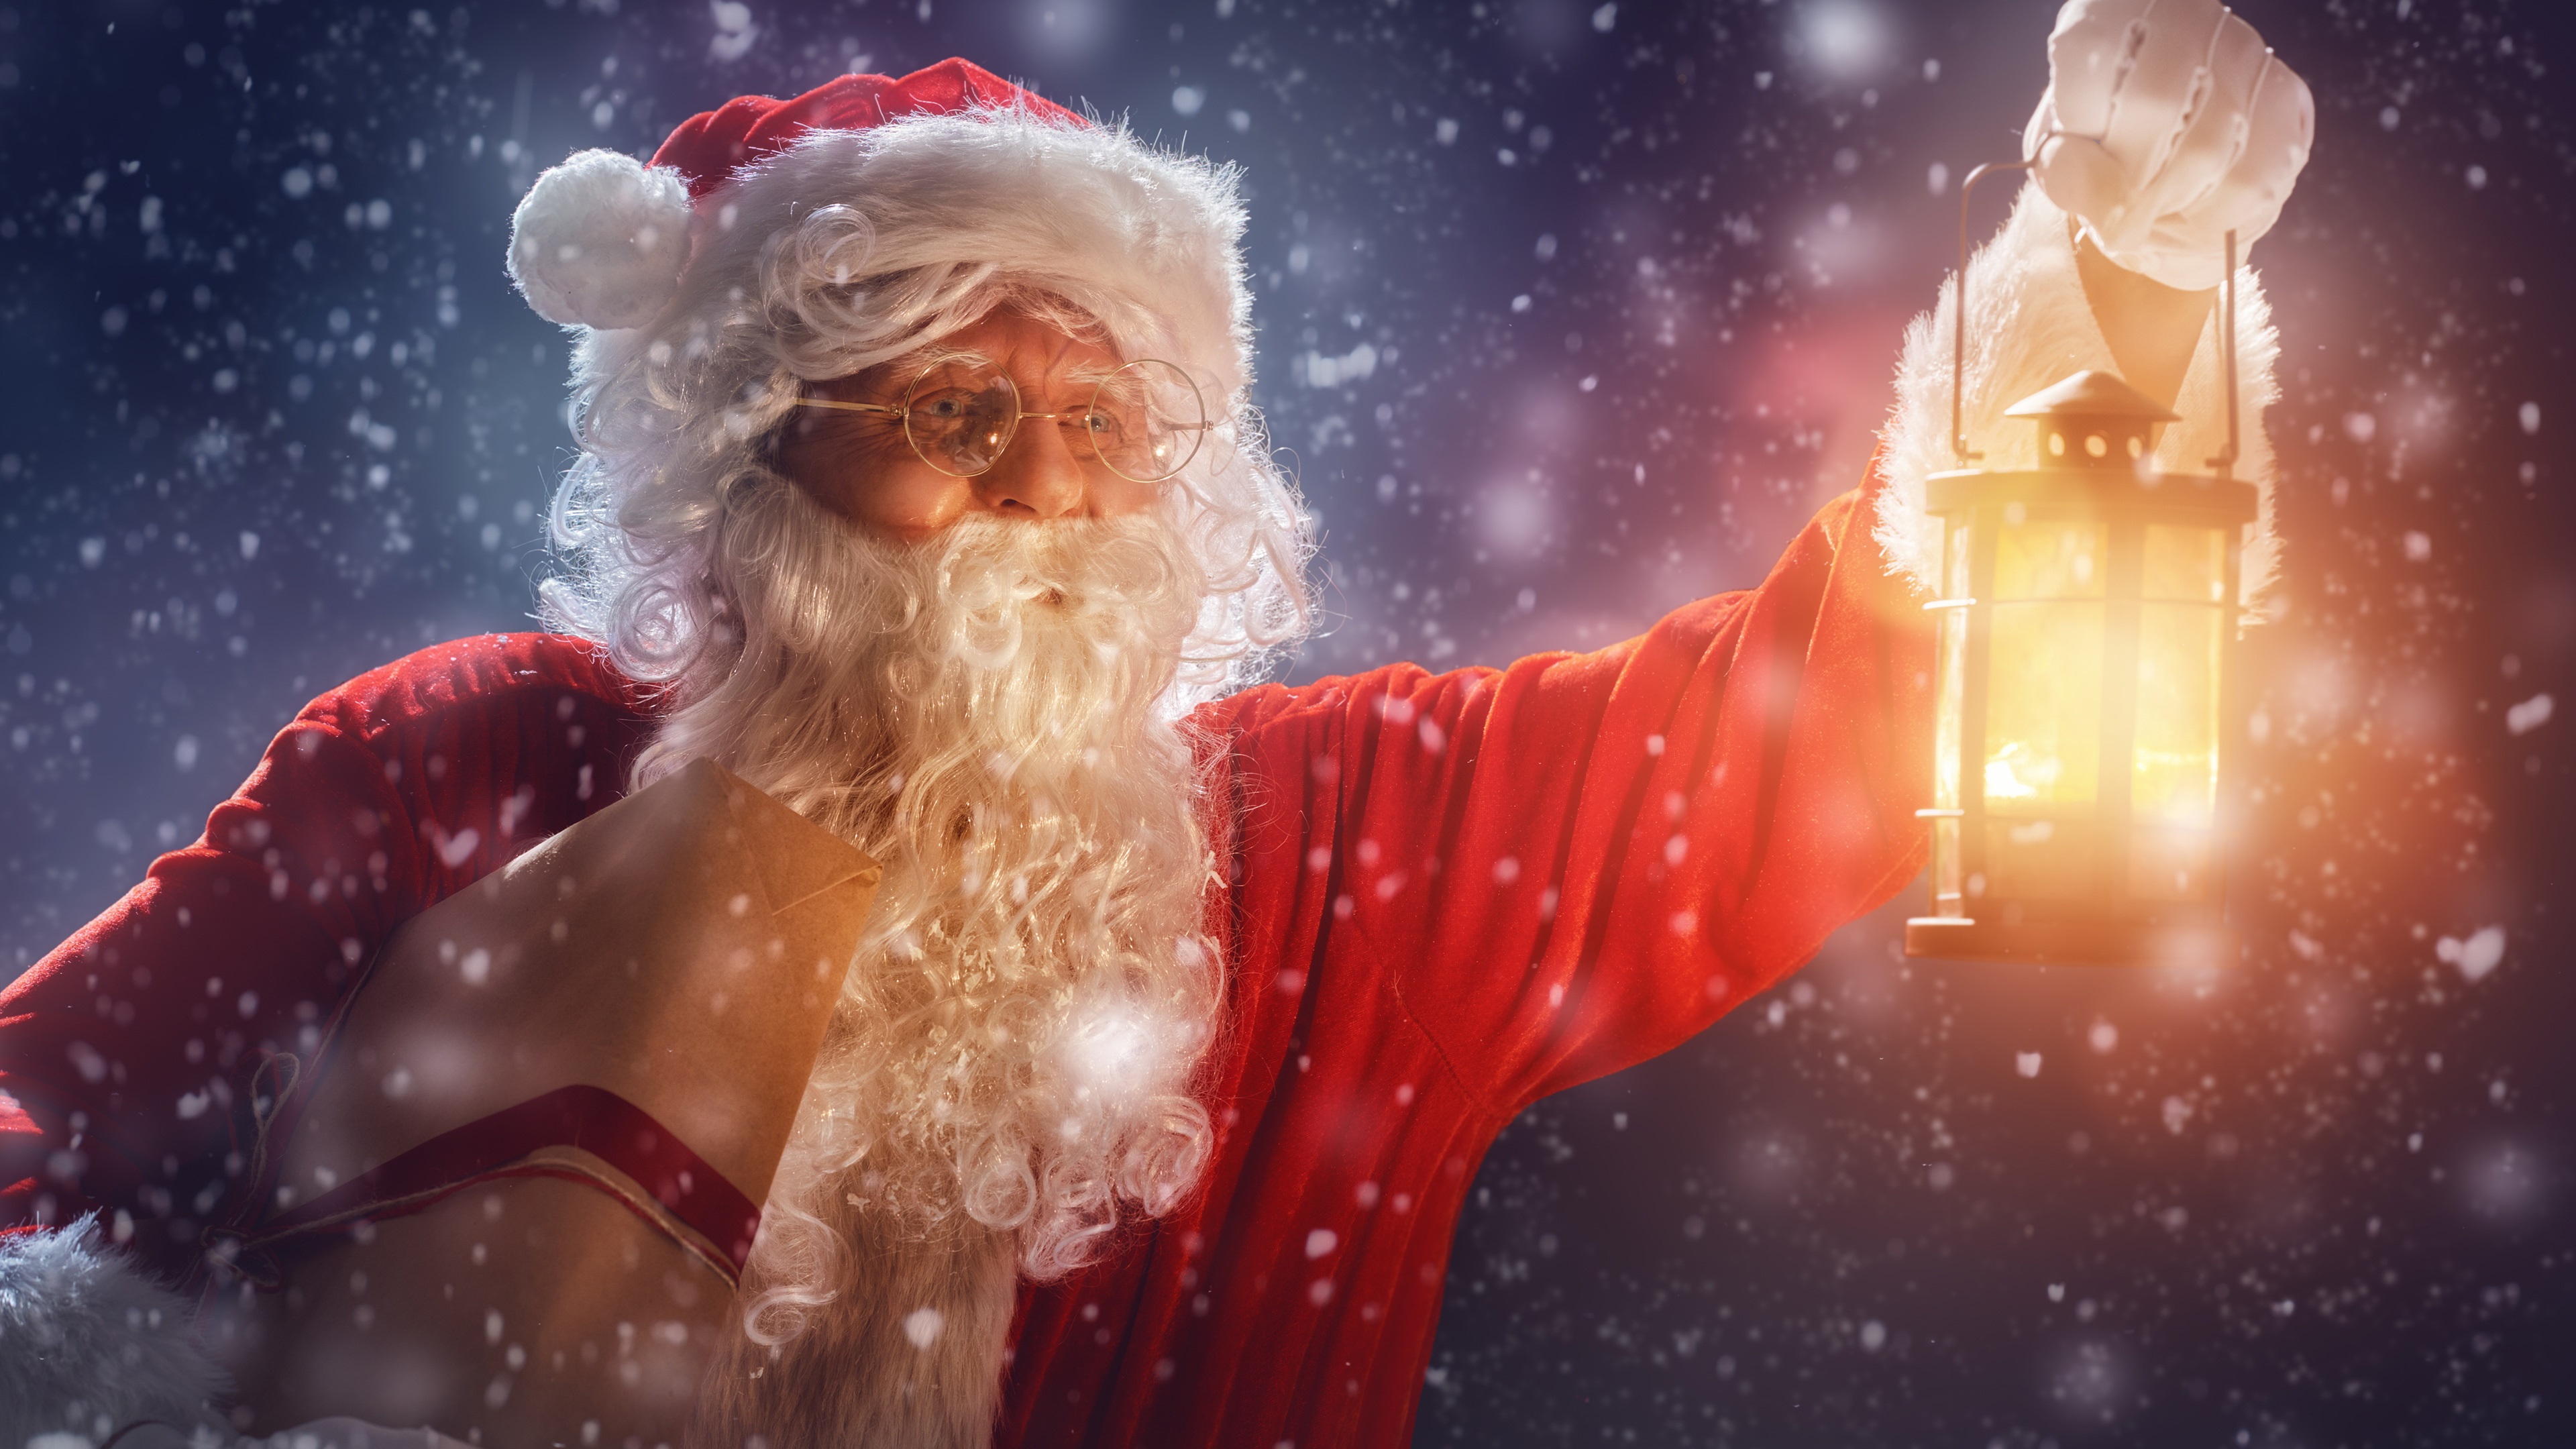 Wallpaper Christmas, Santa Claus, gifts, snow, lantern